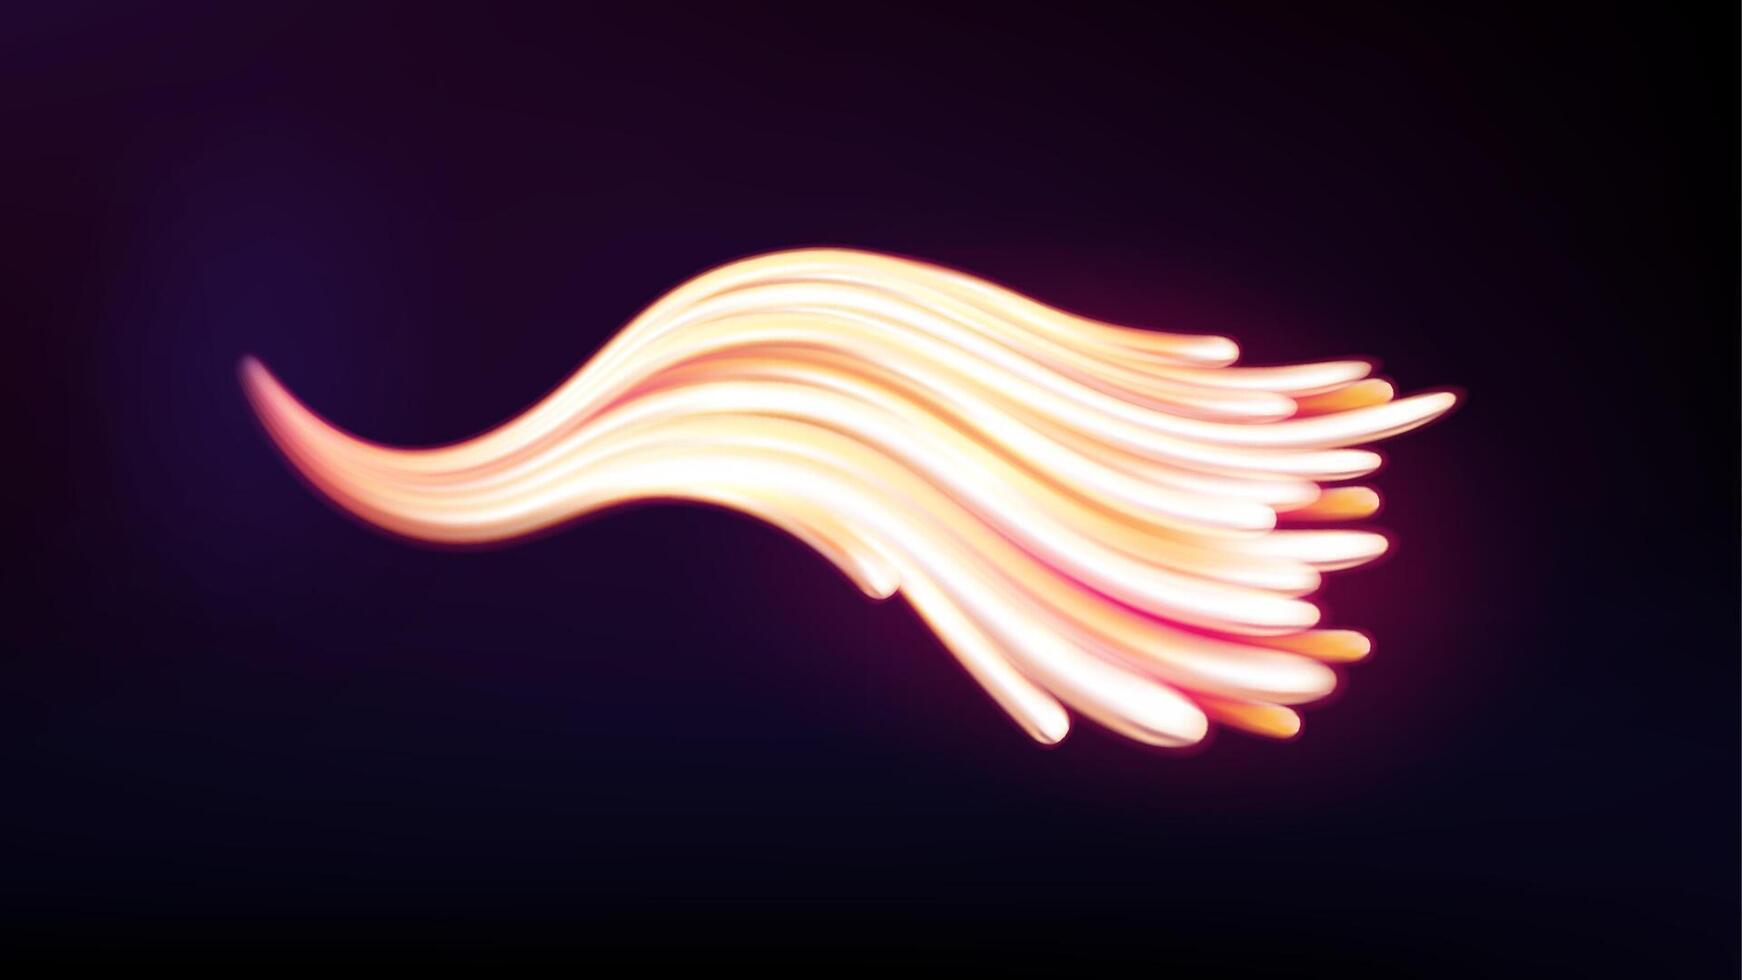 magie neon licht gebogen lijnen, abstract achtergrond, vector illustratie